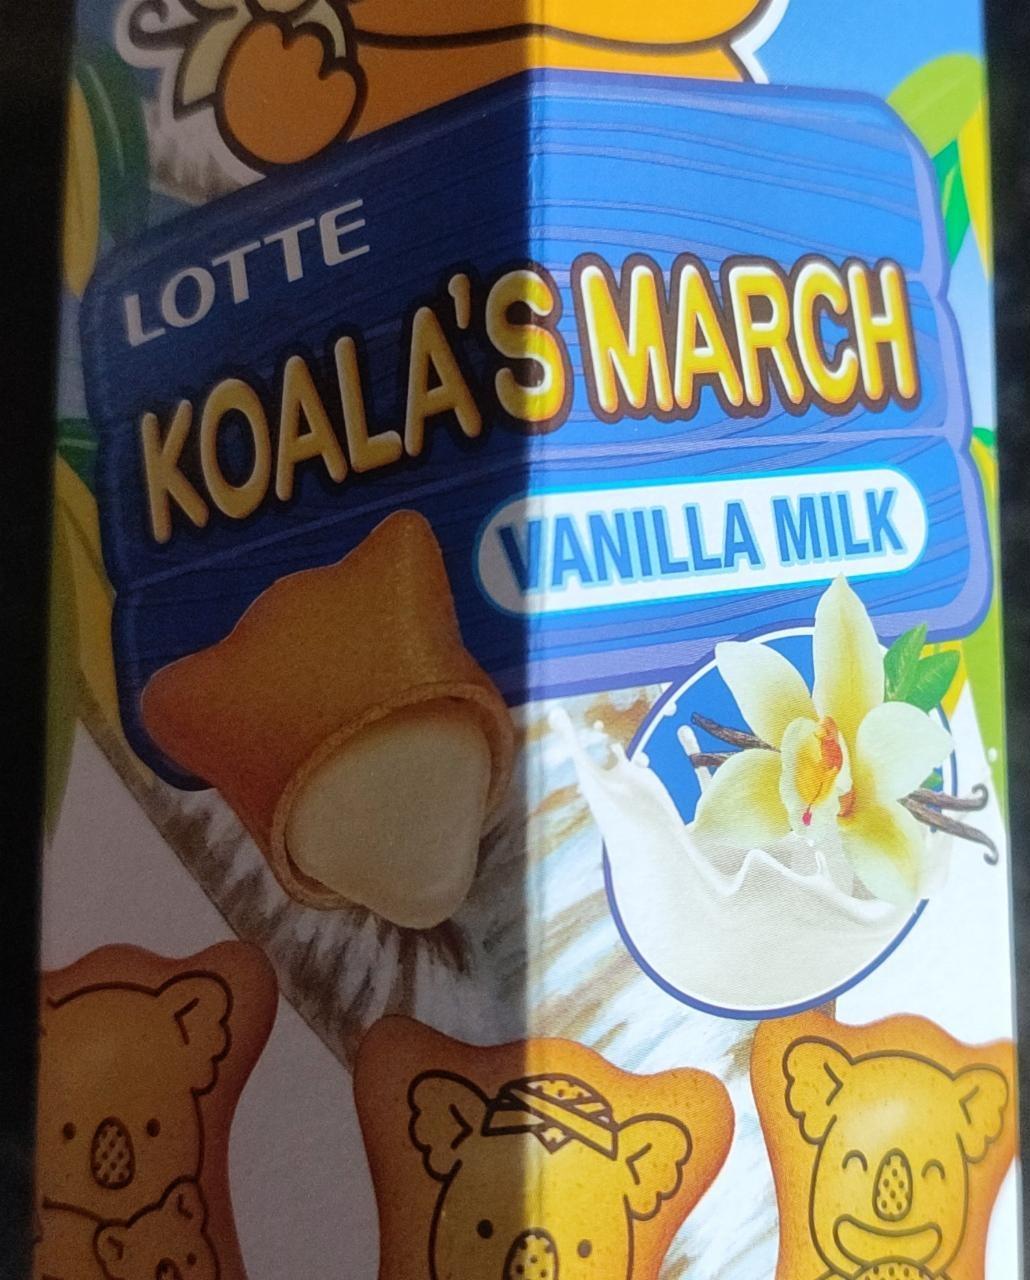 Fotografie - Koala's March vanilla milk Lotte